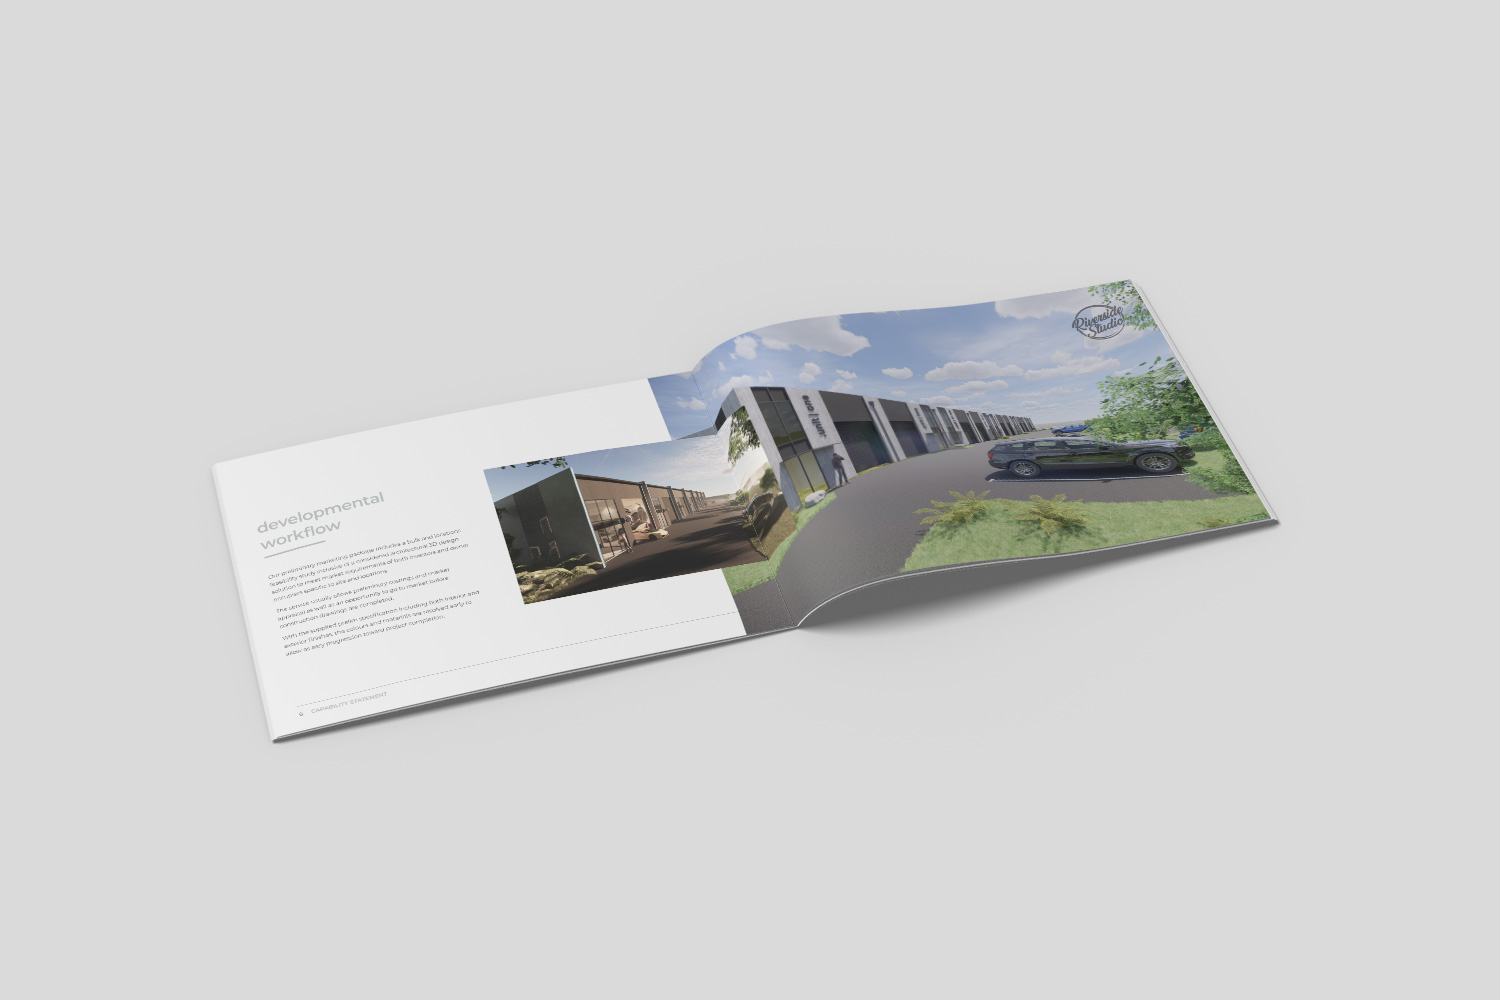 riverside studios graphic design internal documents, Ashleigh May Design